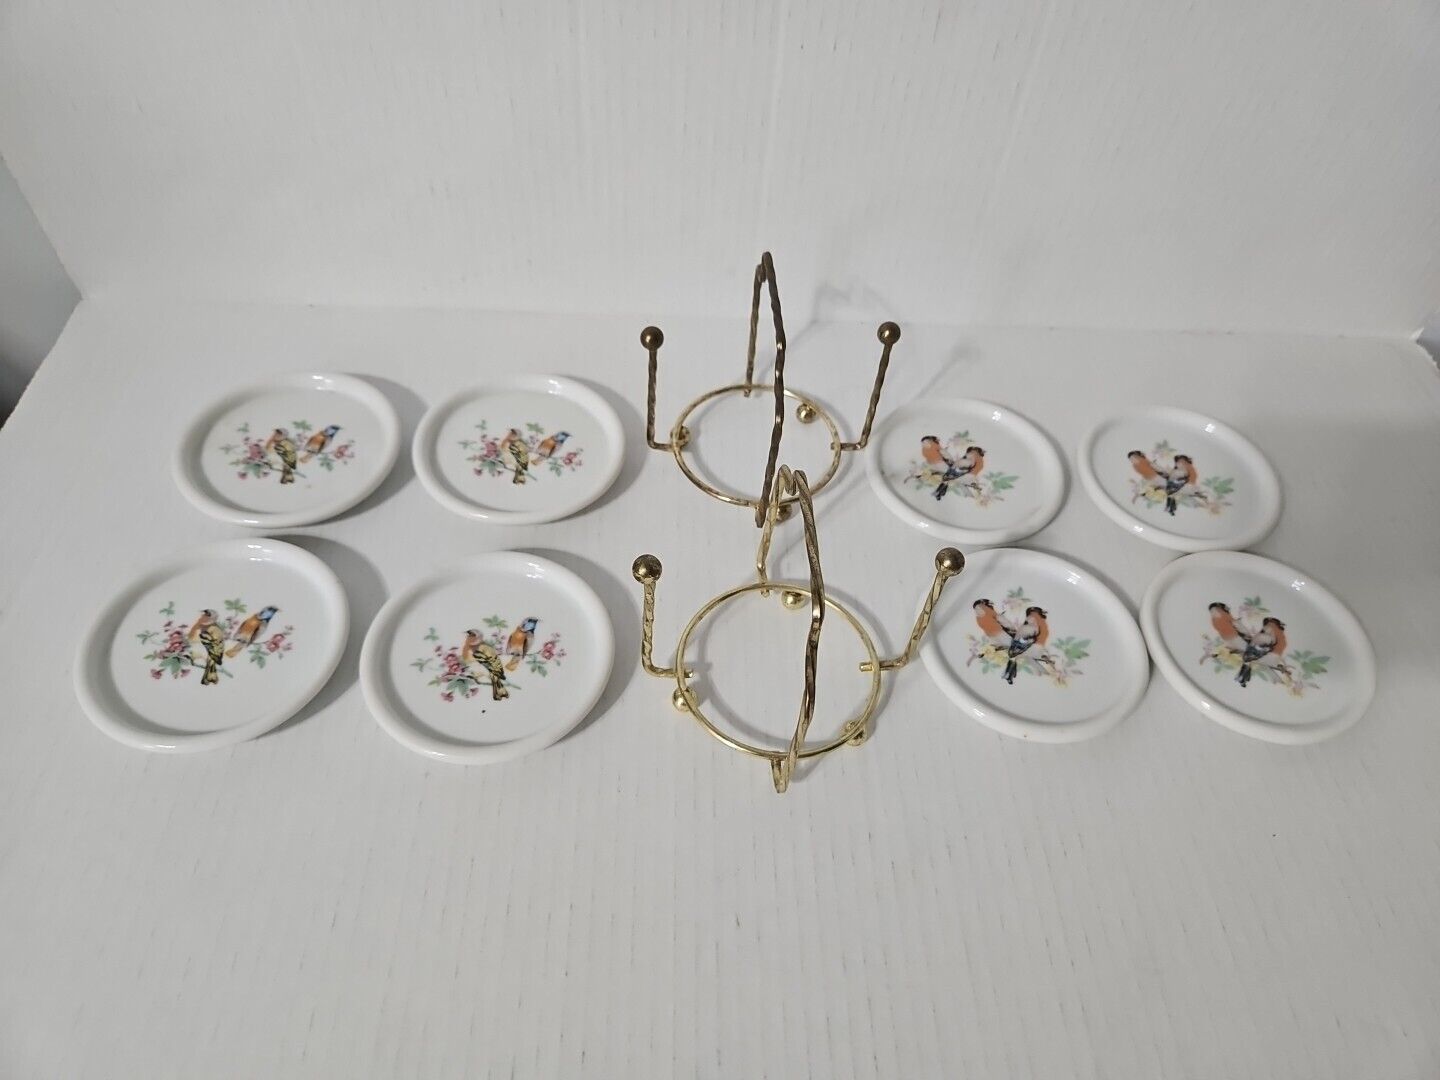 Vintage INTERPUR Porcelain Coasters Brass Holder Set of 8 Bird Plates 3.5 inch